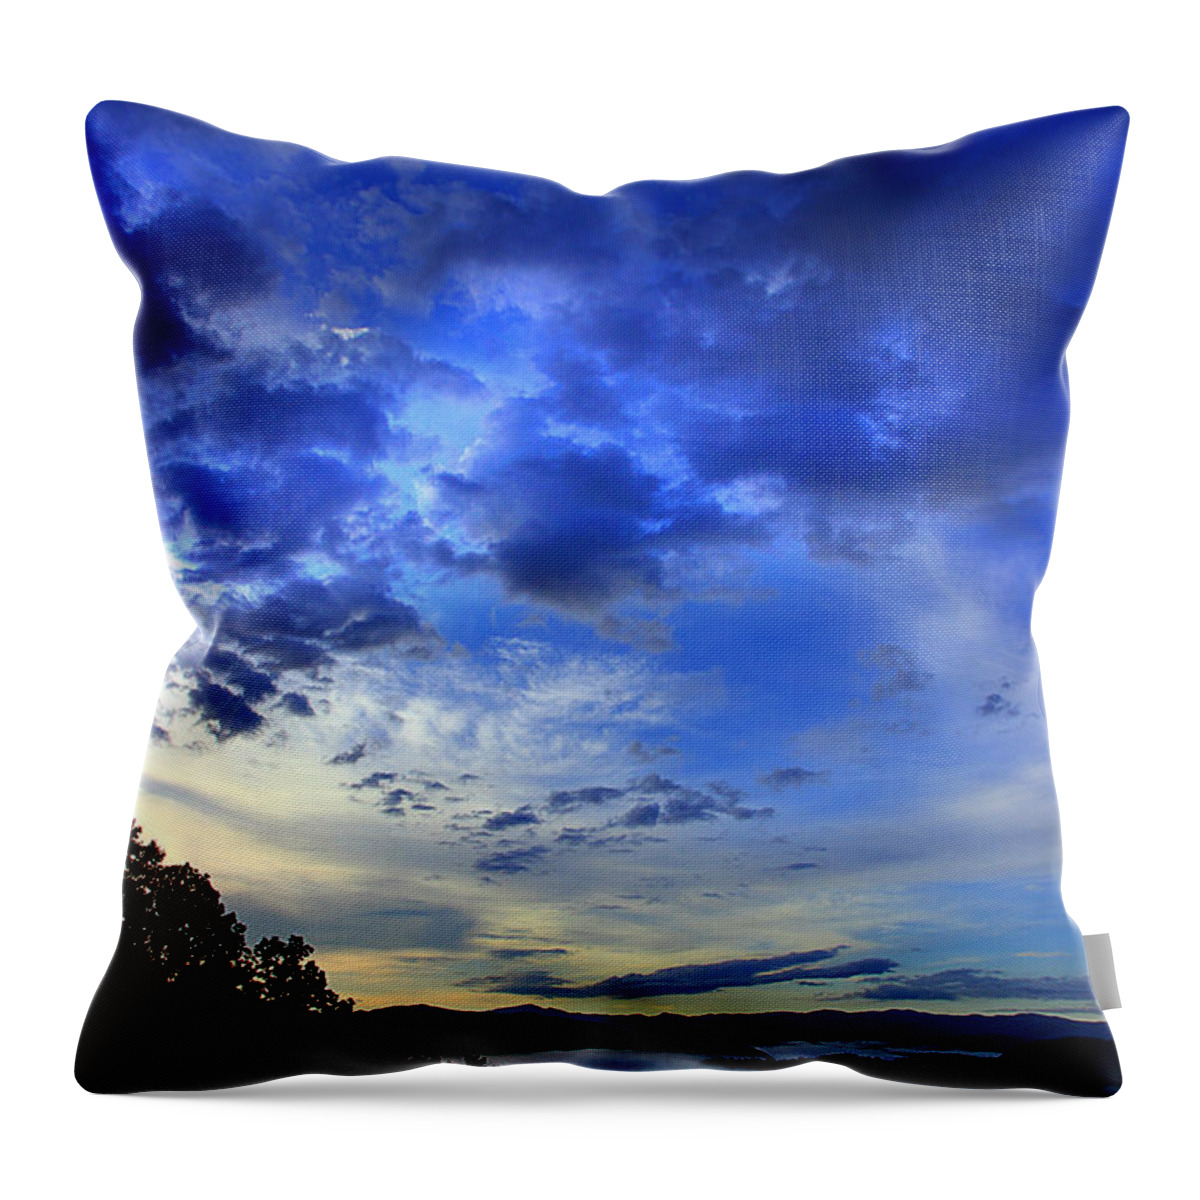 Smoky Mountains Throw Pillow featuring the photograph A Smoky Mountain Dawn by Michael Eingle